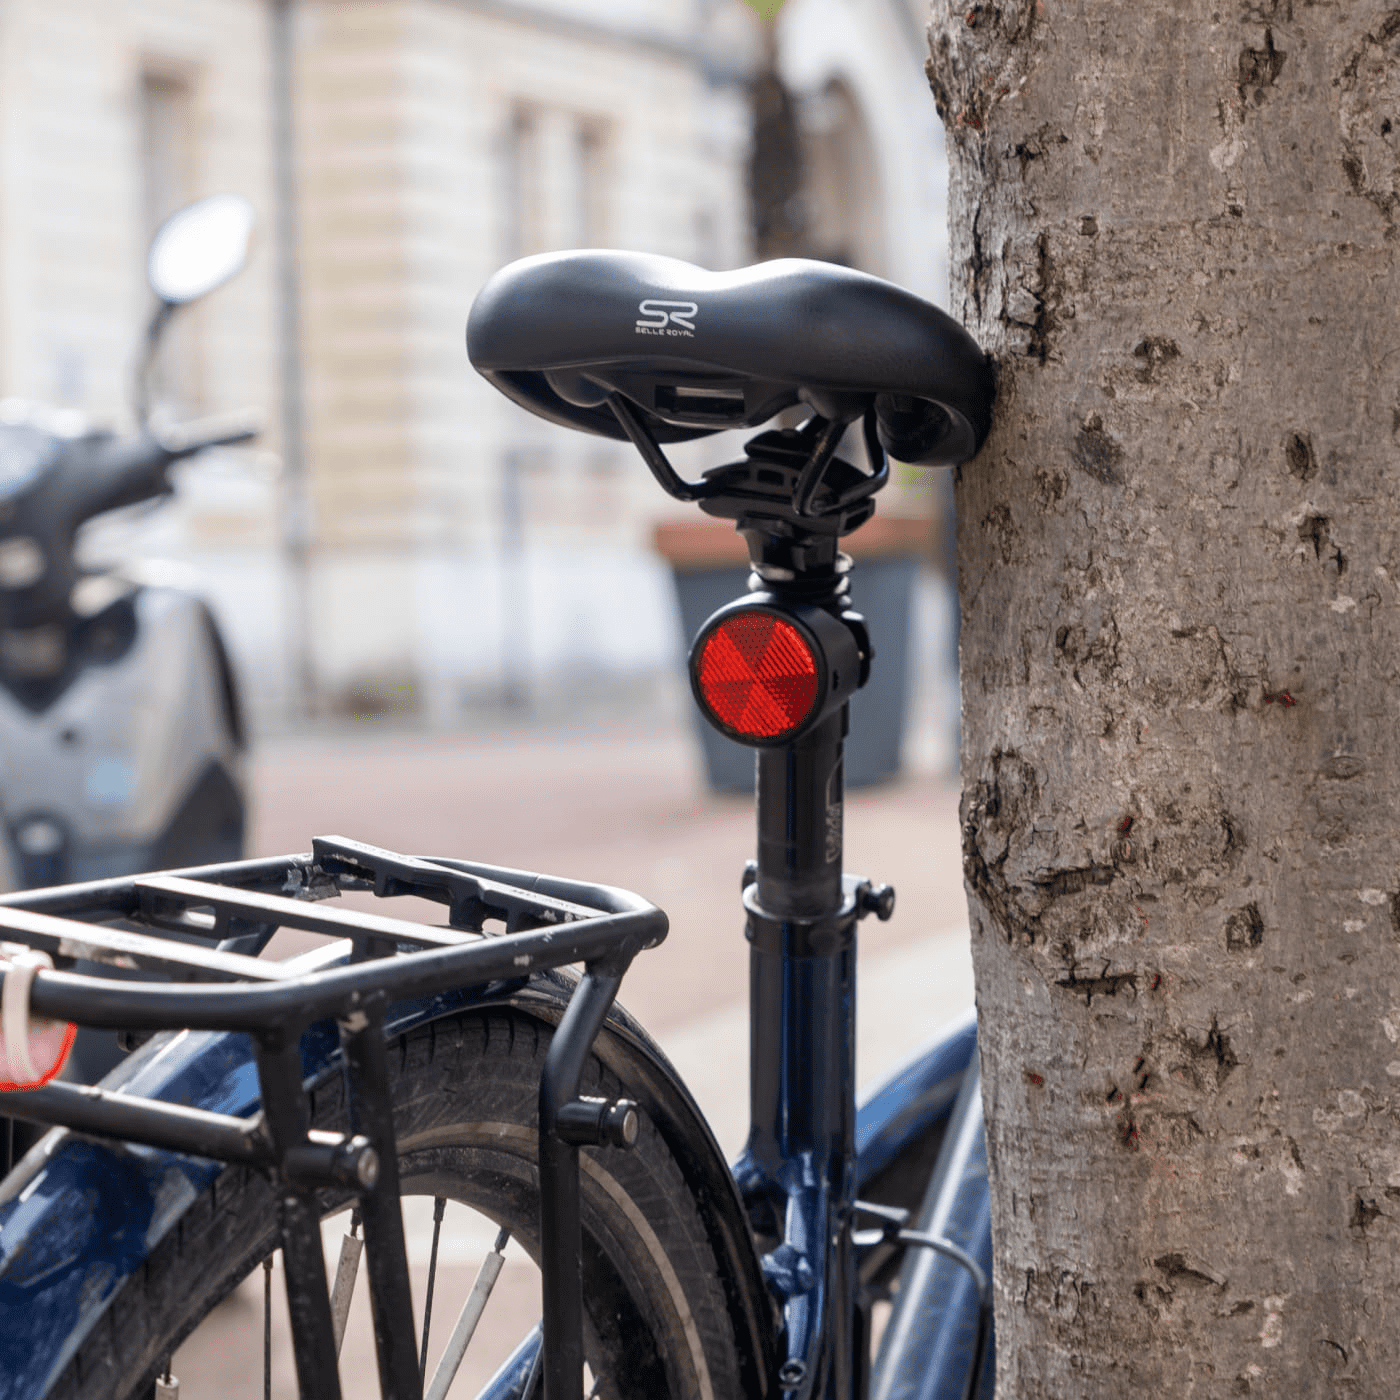 Invoxia Bike Tracker - Traceur GPS vélo avec alerte antivol